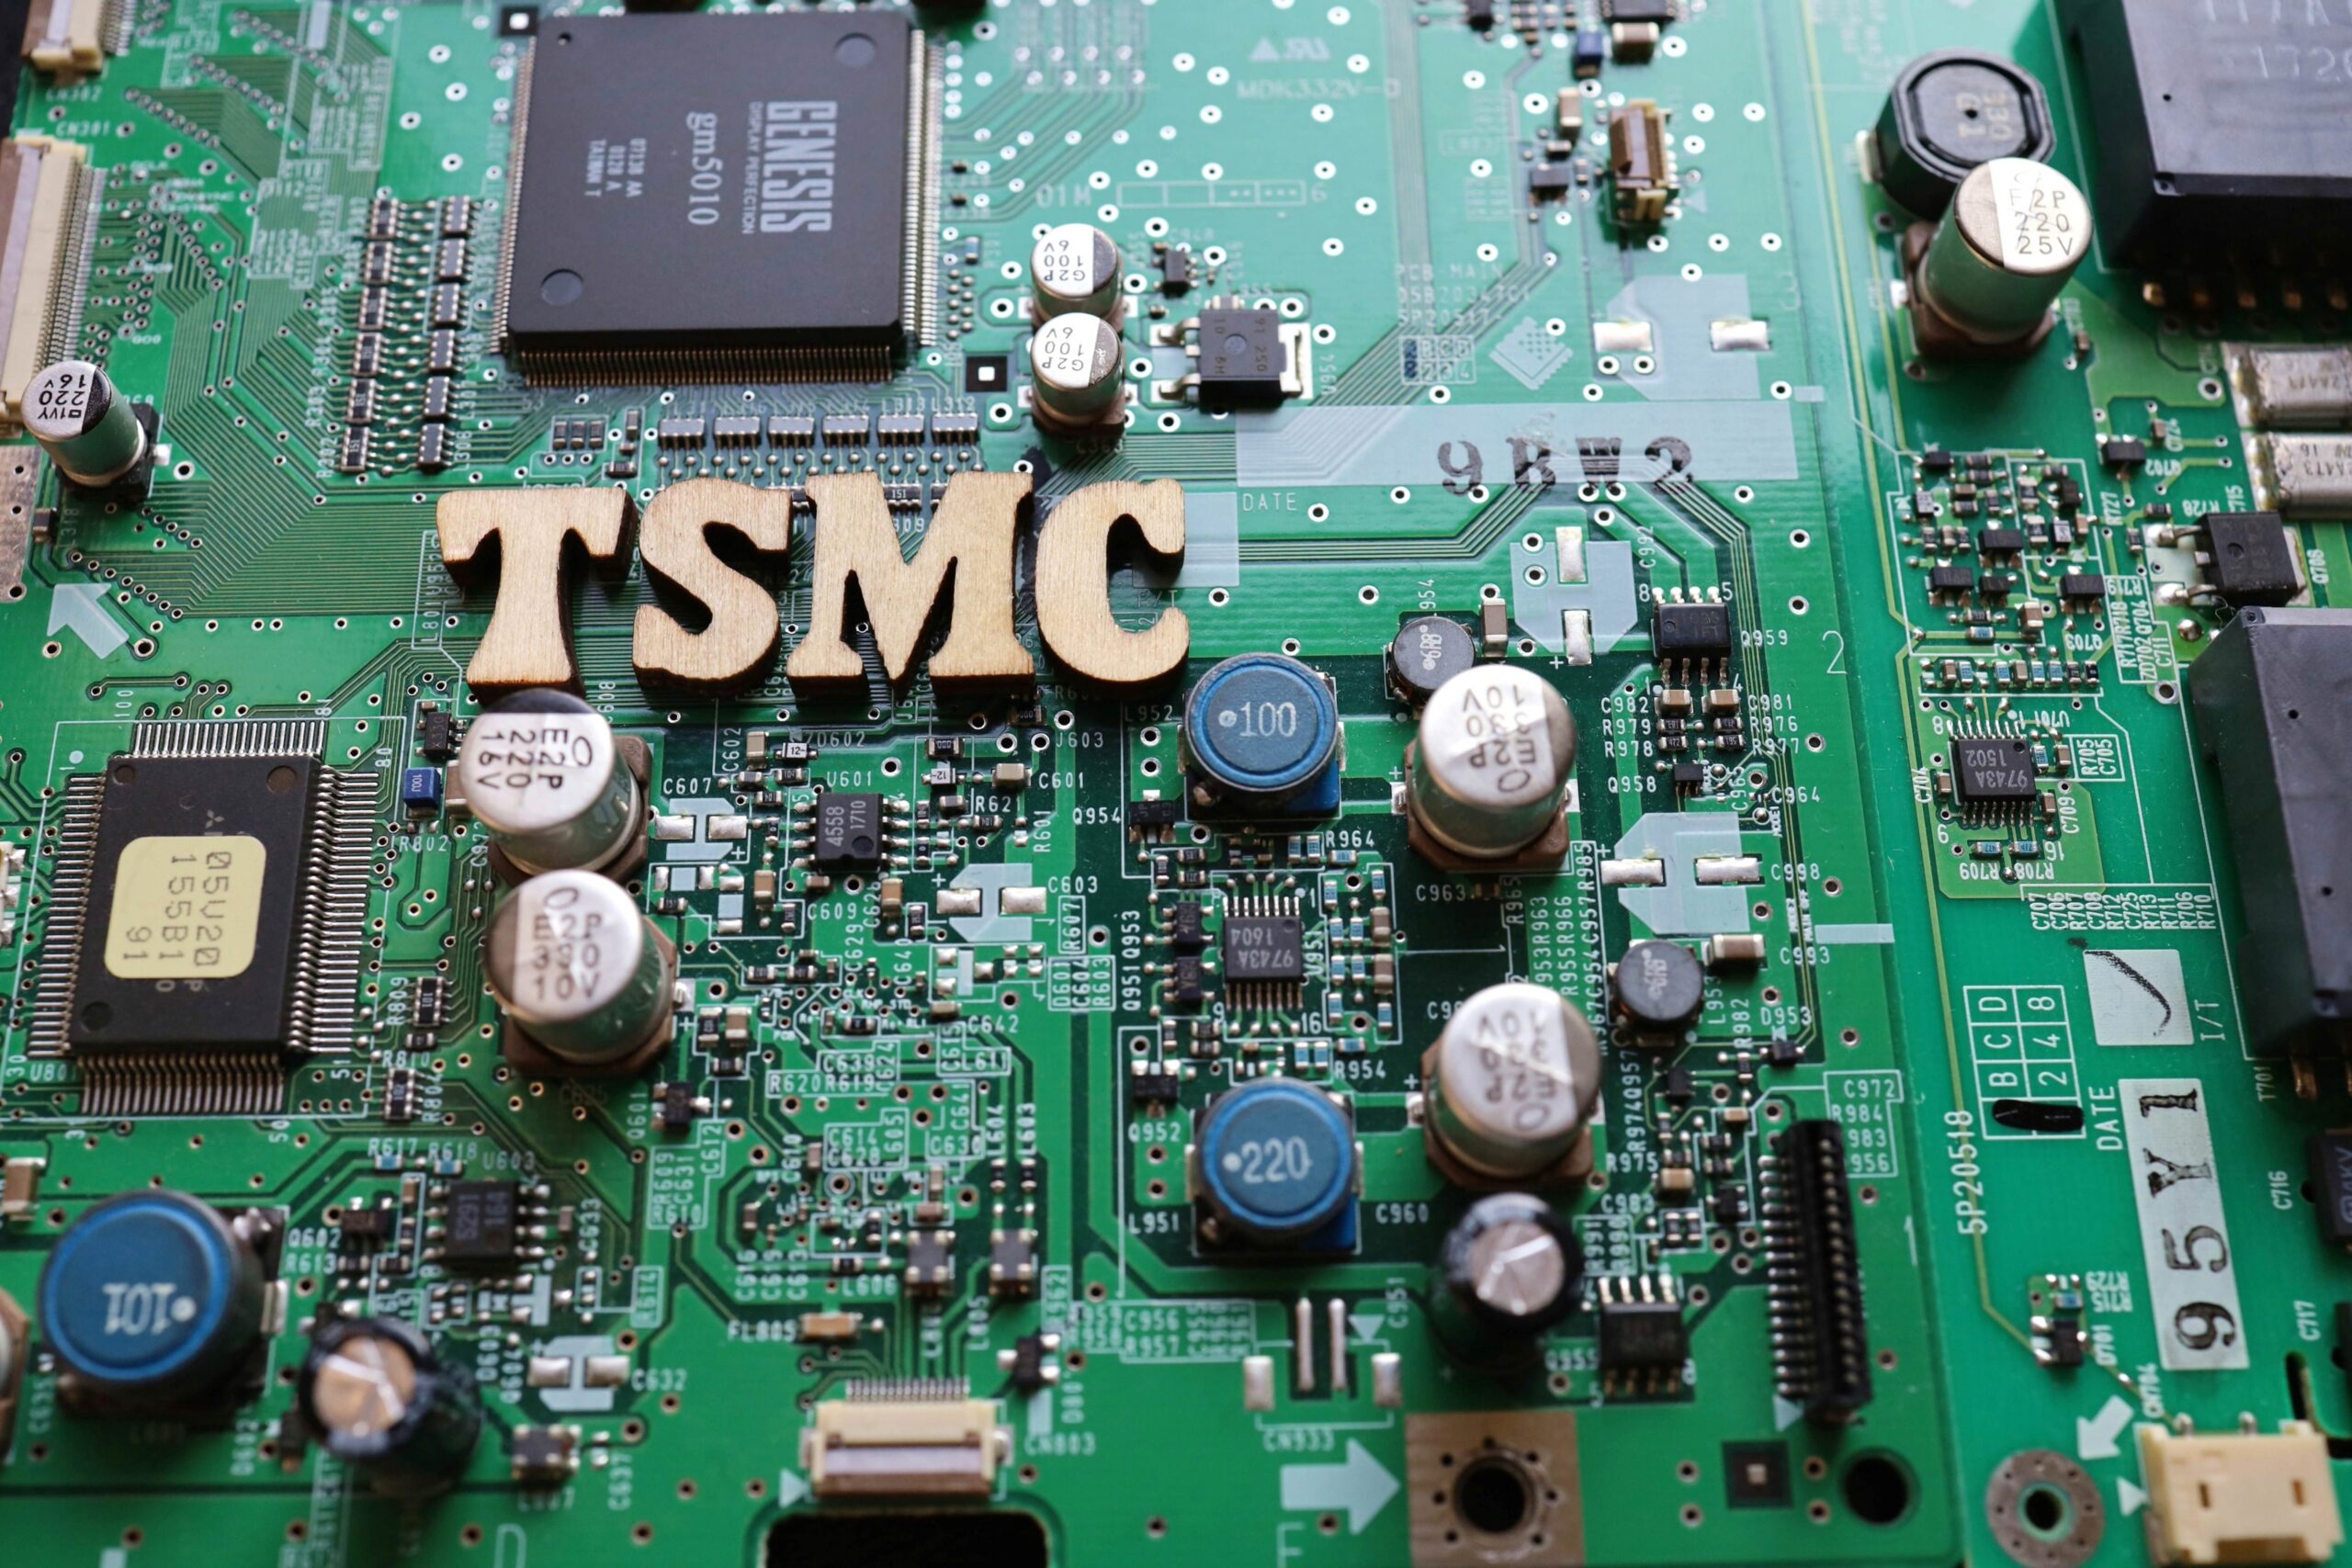 TSMC Triples Footprint in Arizona: $65 Billion Investment in Advanced Chip Manufacturing